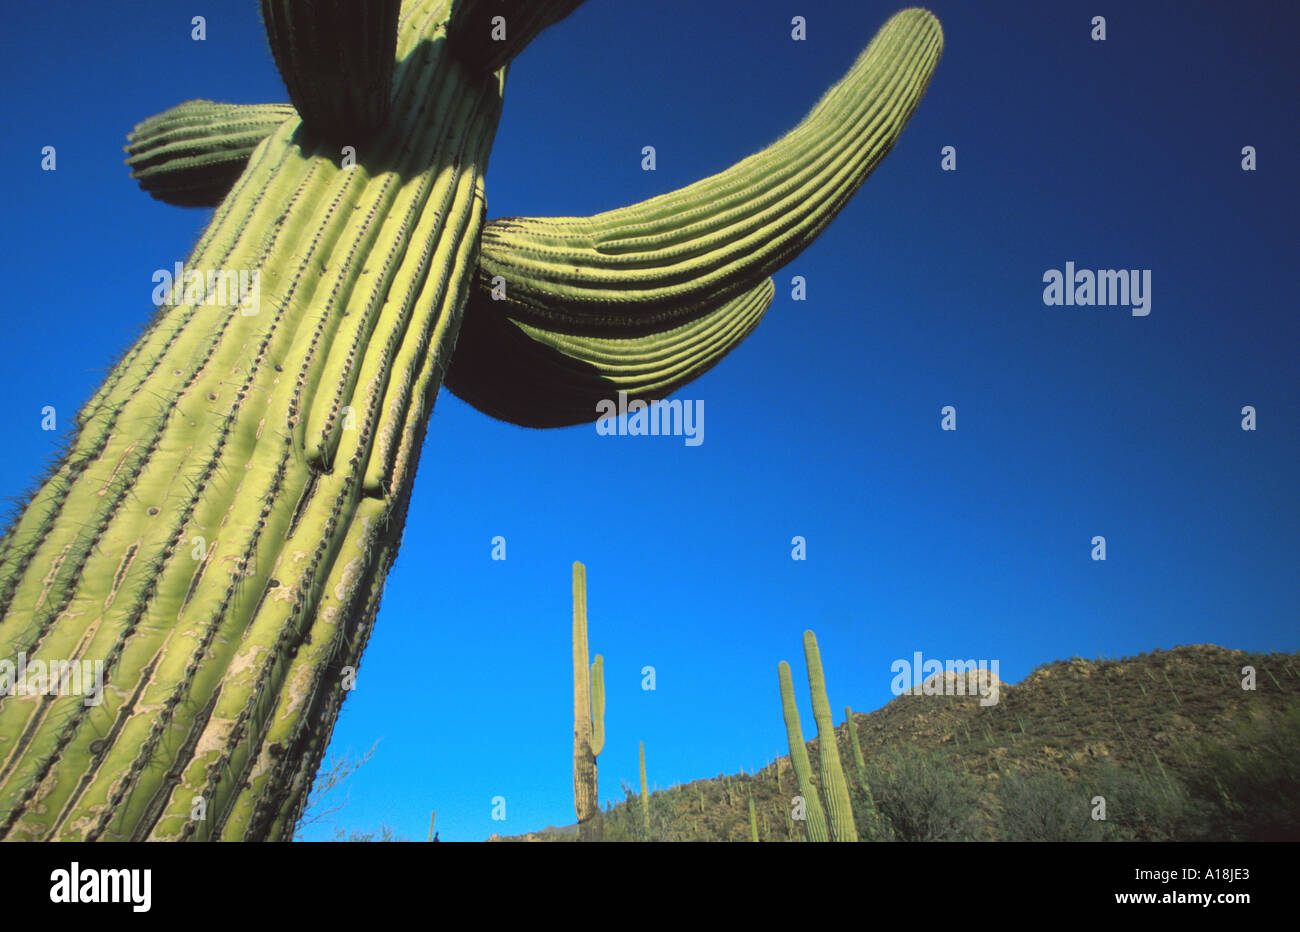 Saguaro-Kaktus (Carnegiea Gigantea, Cereus Giganteus), gegen blauen Himmel, Würmer-Auge Ansicht, Apr.04, Saguaro NP, Arizona, USA. Stockfoto